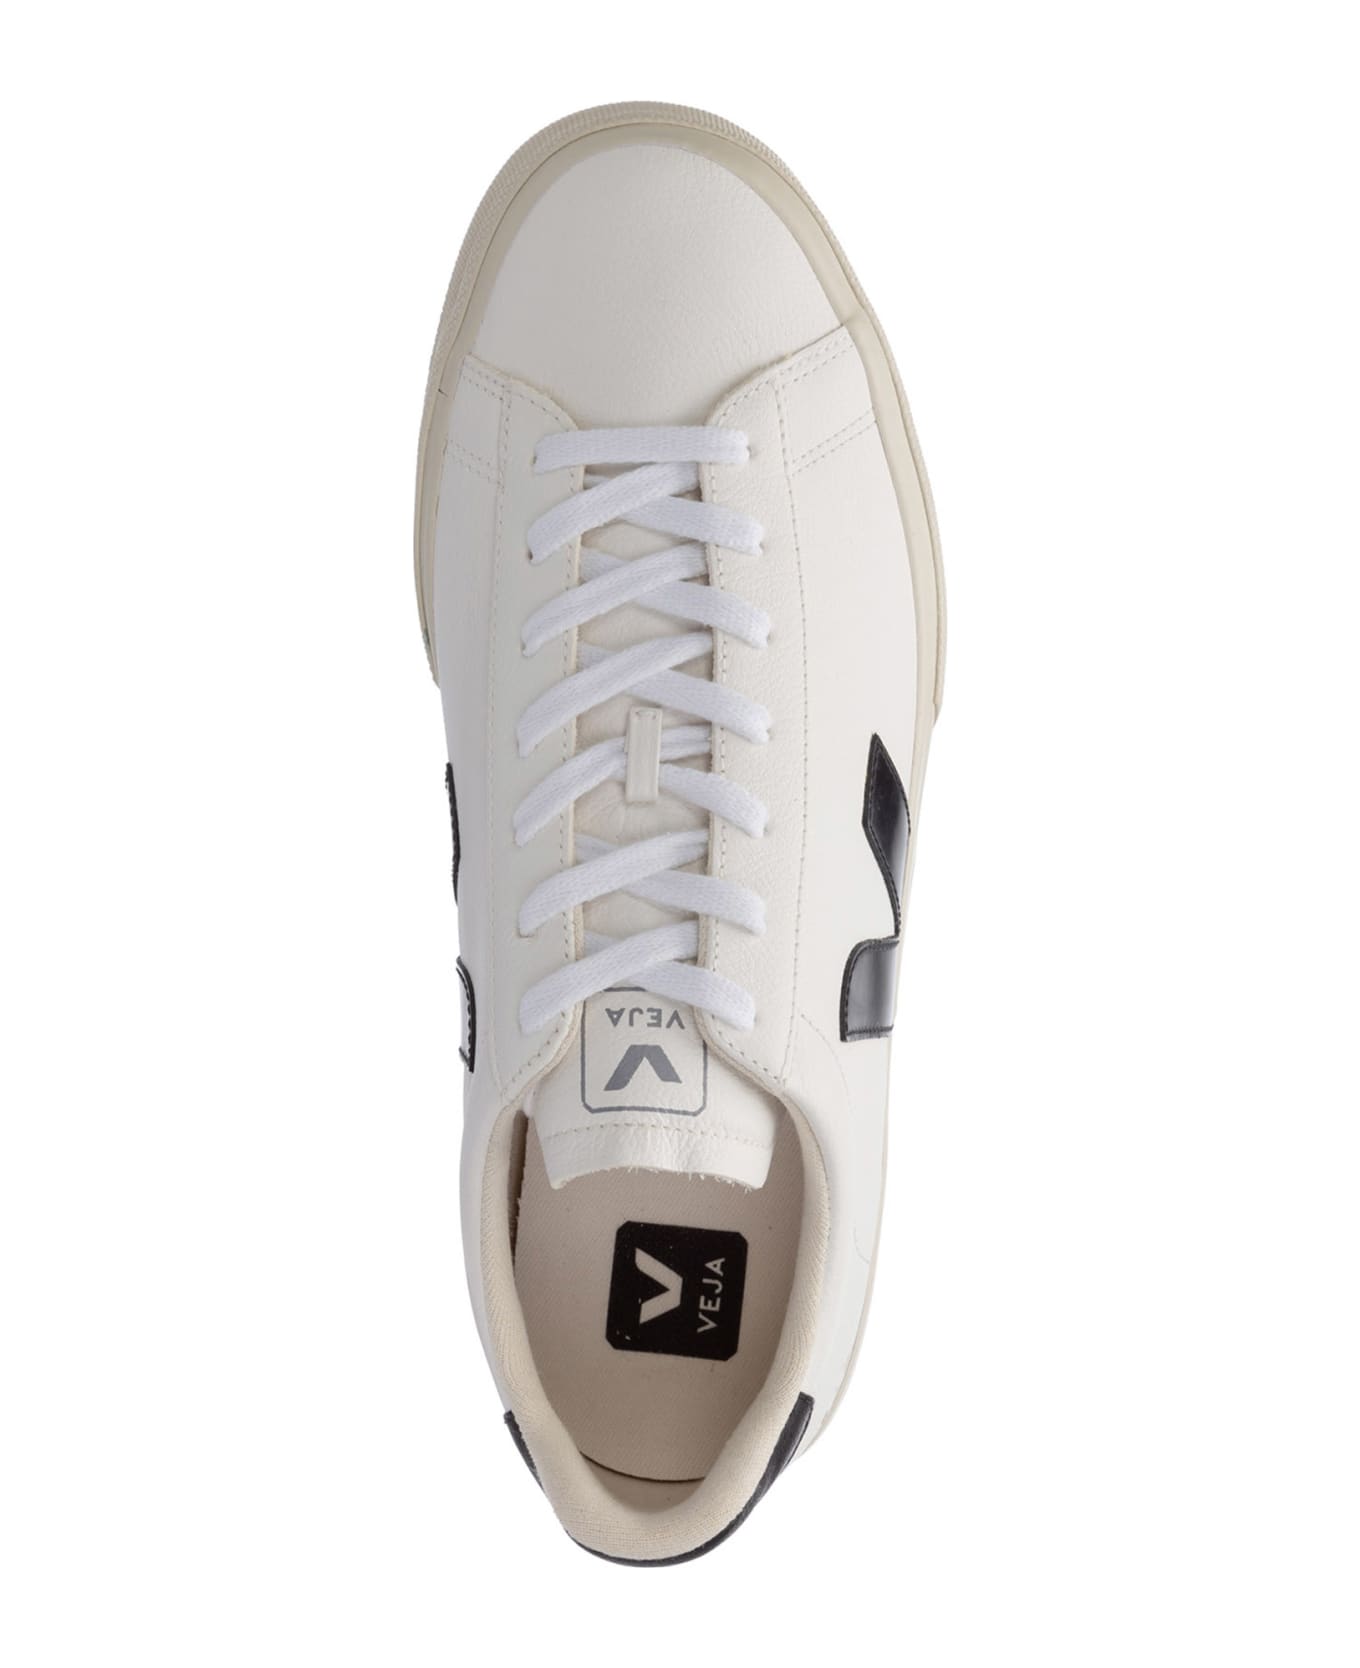 Veja Campo Leather Sneakers - White/black